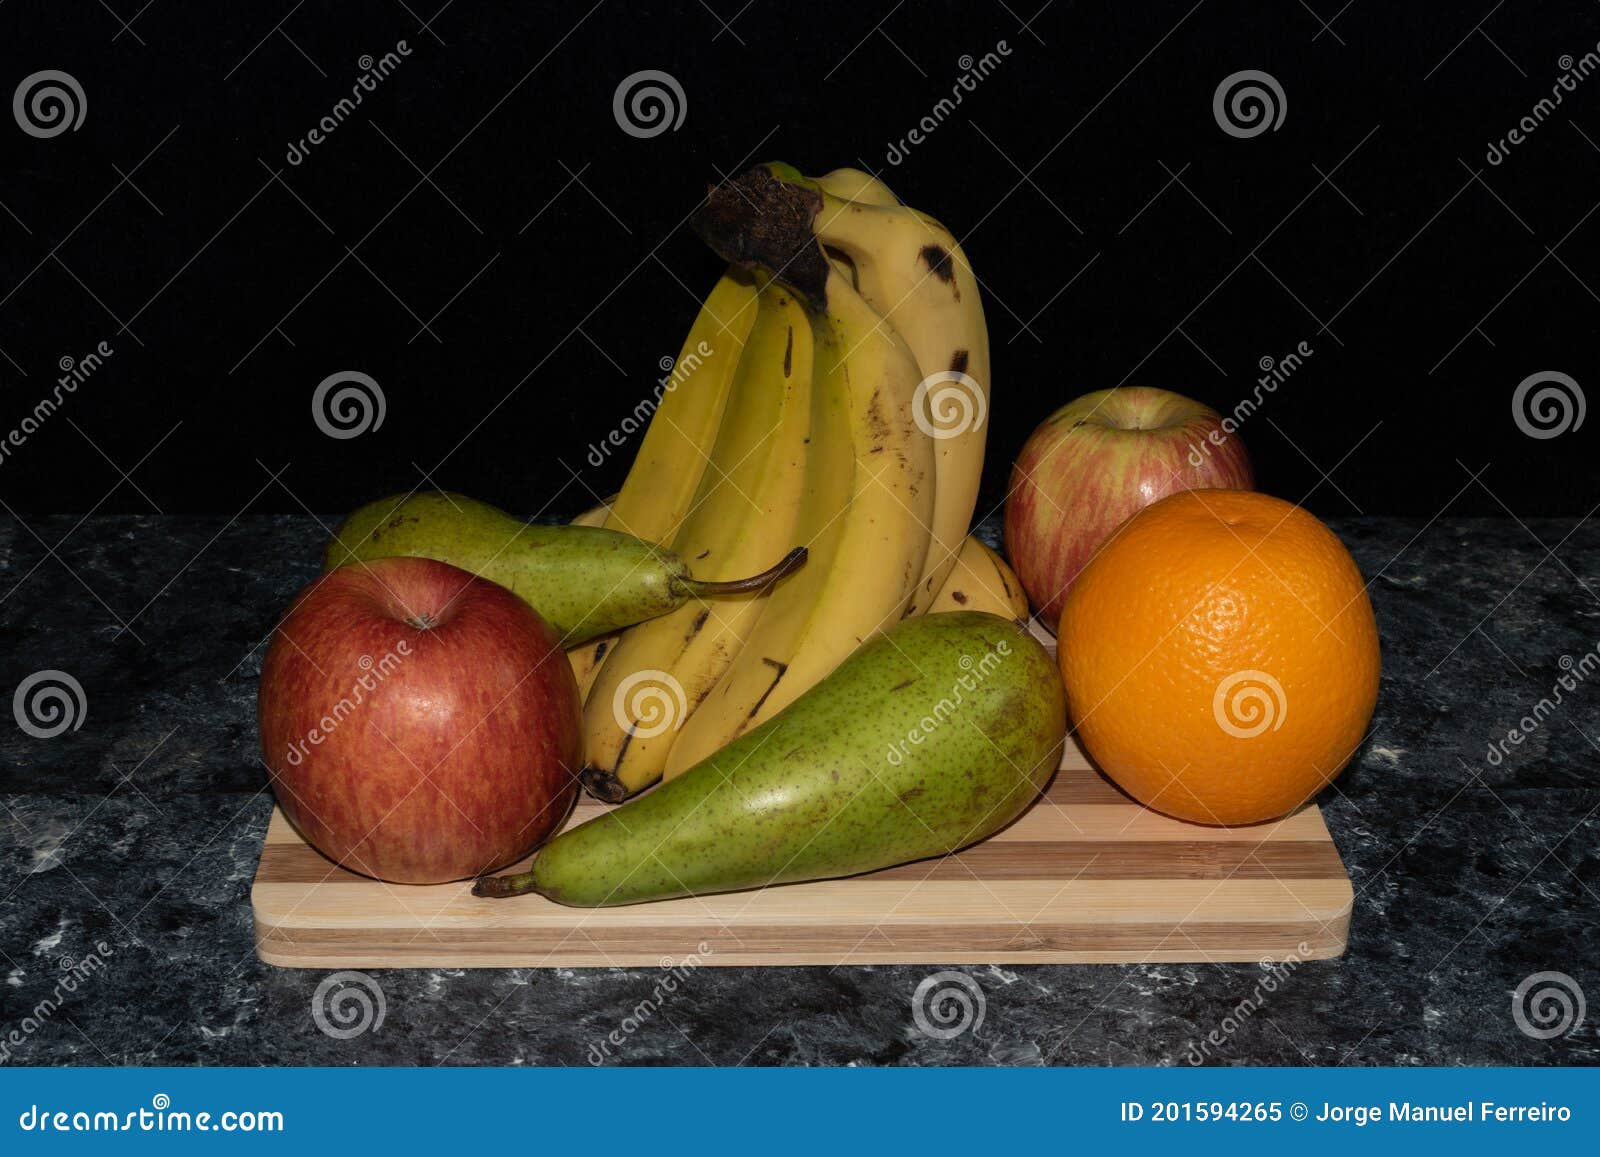 primer plano de imagen de frutas, plÃÂ¡tanos, manzanas peras y naranja colocadas sobre mesa